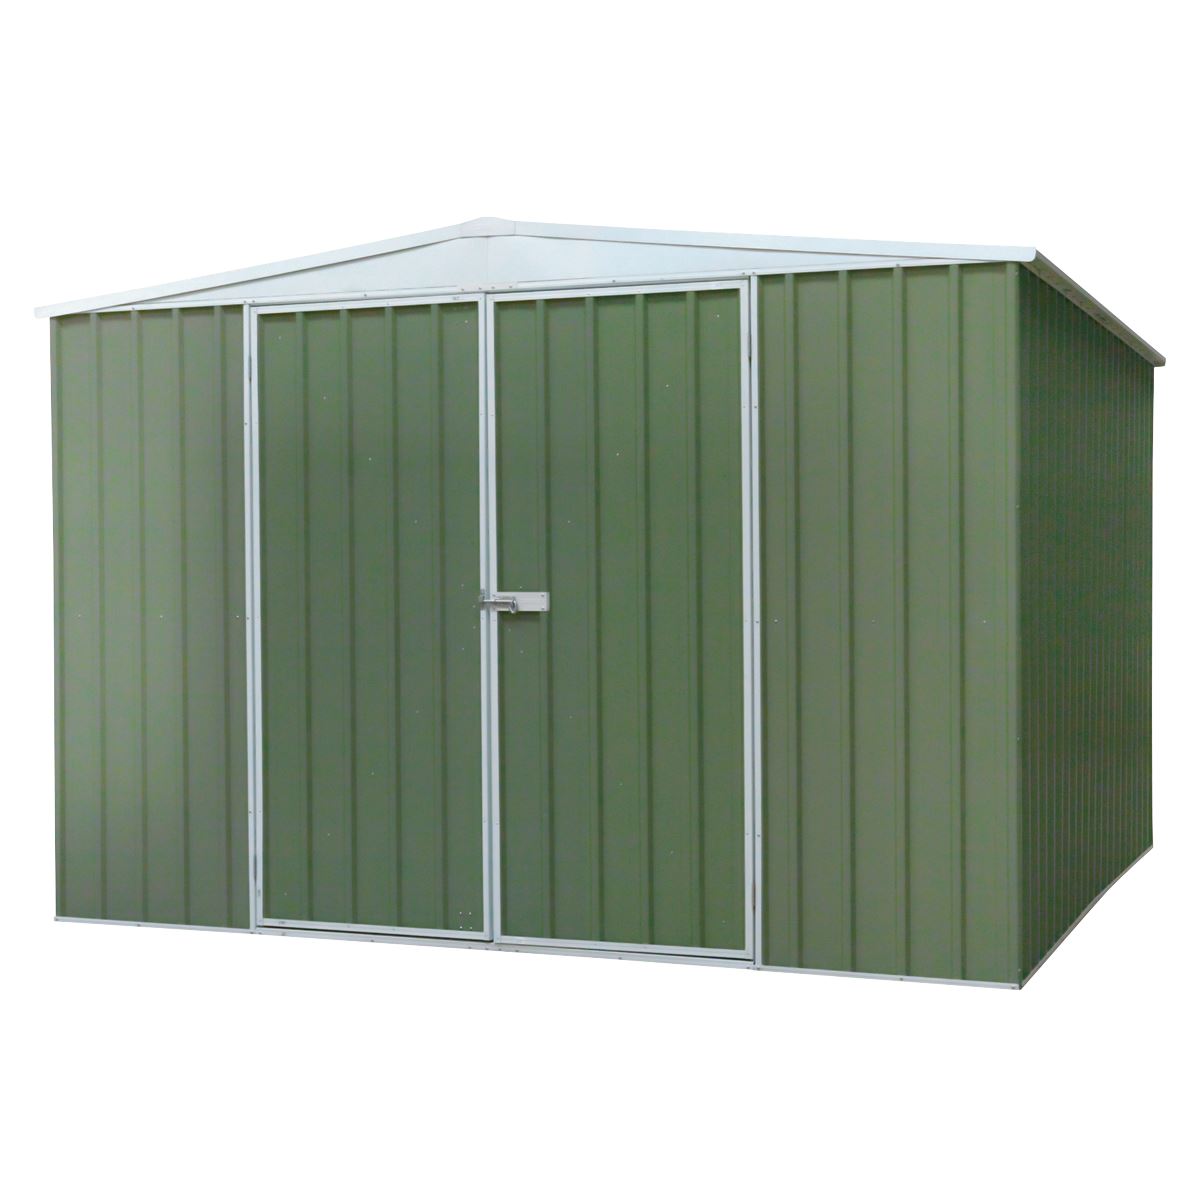 Dellonda Galvanised Steel Metal Garden/Outdoor/Storage Shed, 10FT x 10FT, Apex Style Roof - Green - DG116